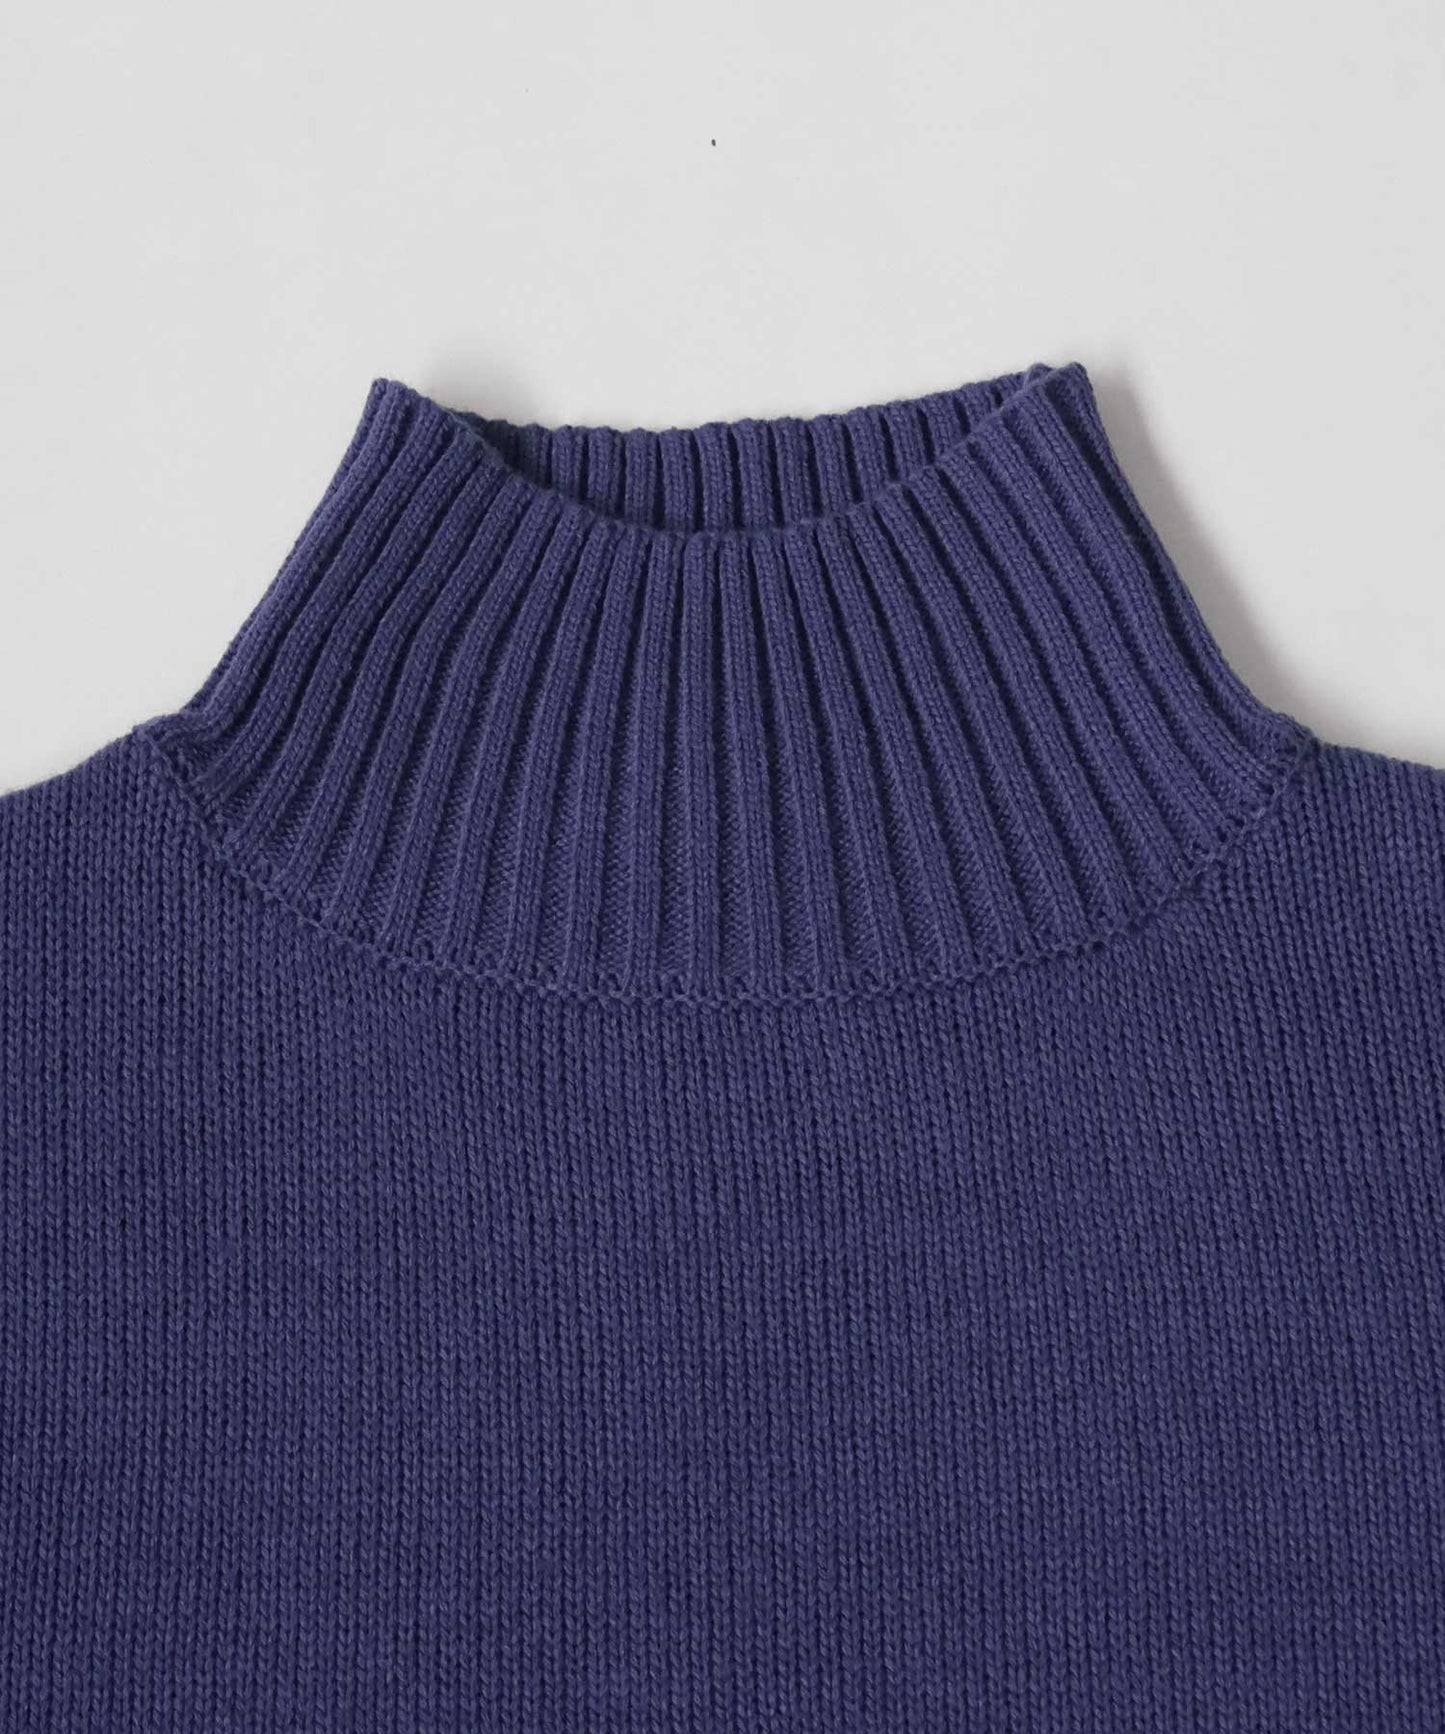 Simple high neck knit Ladies